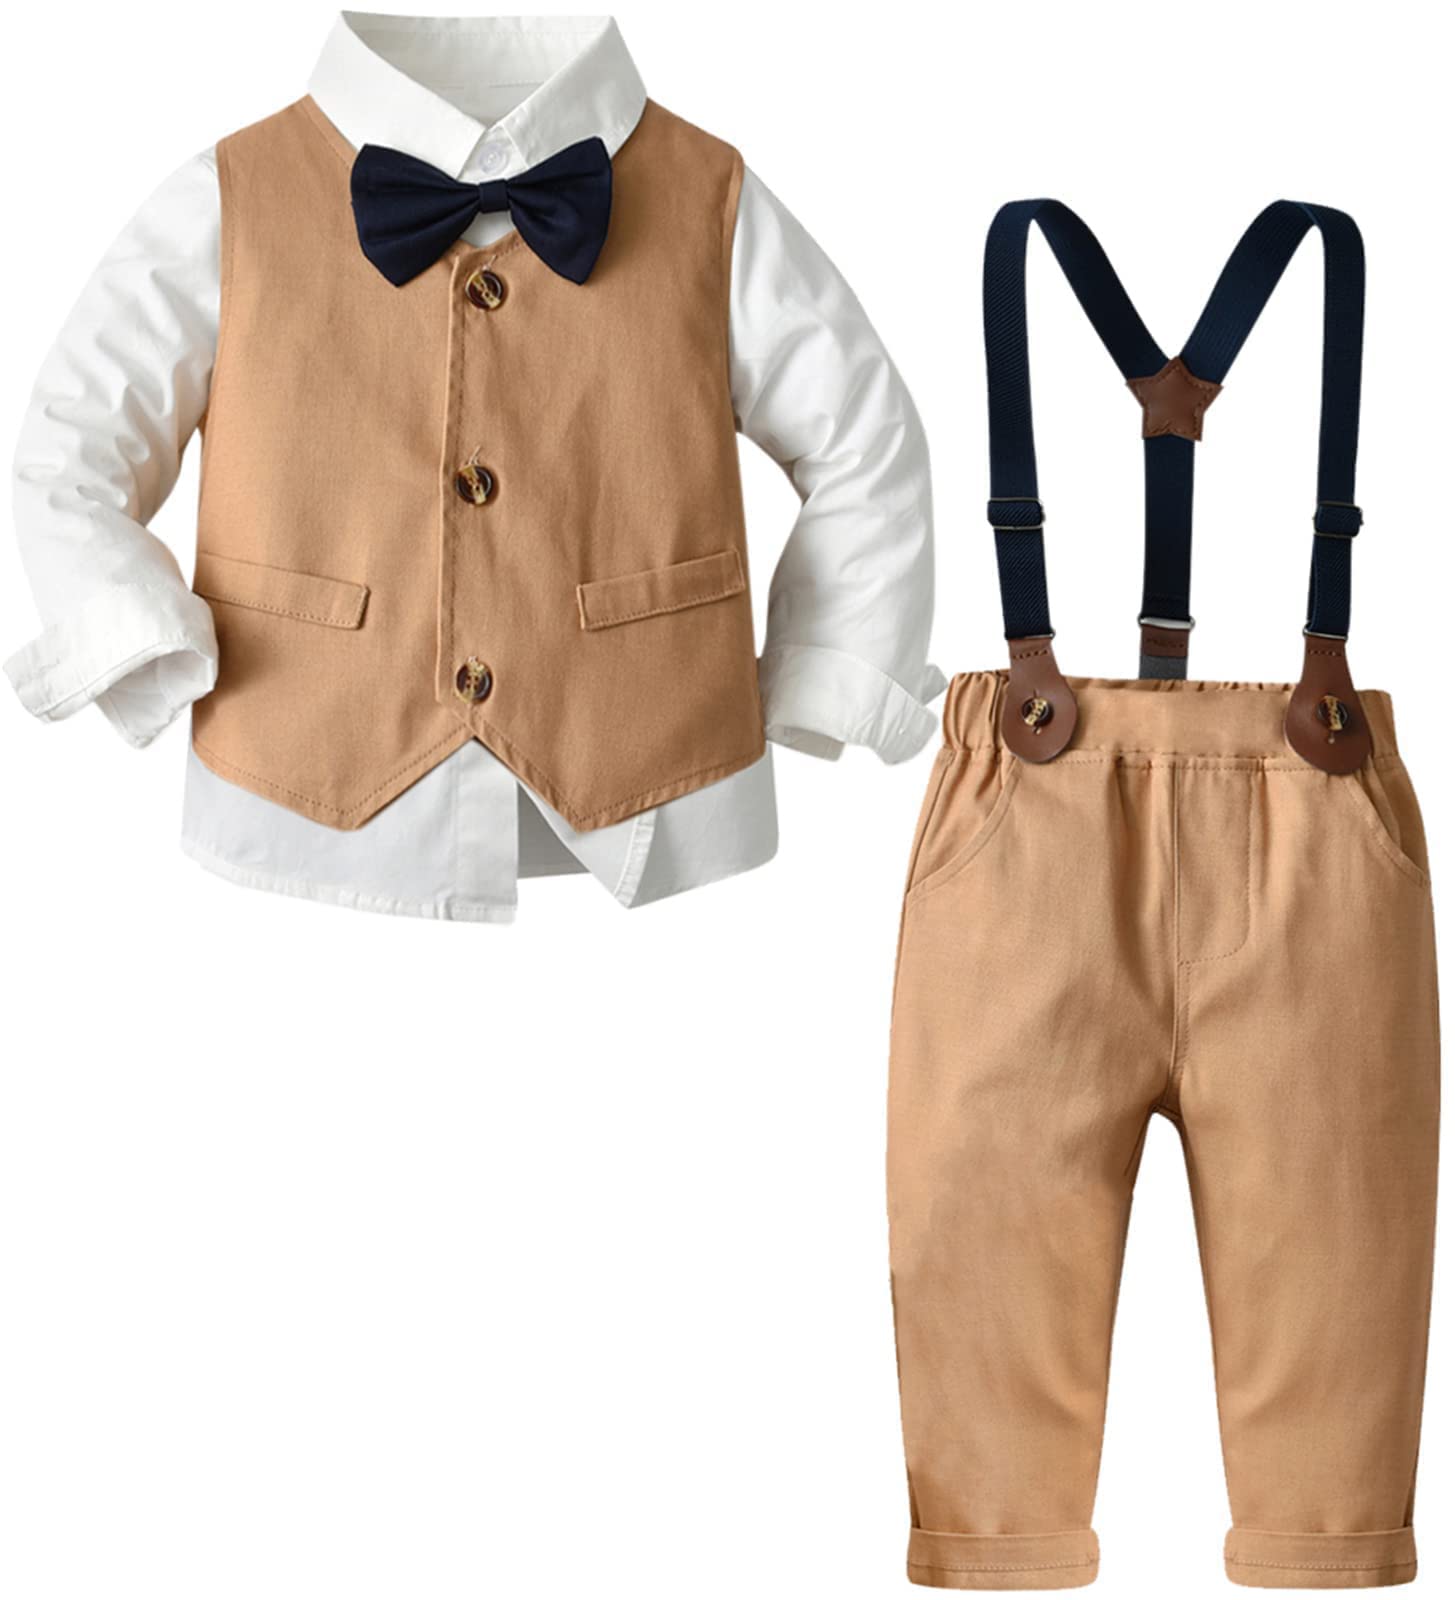 SANgTREE Kids Boys Tuxedo Outfit clothes, 3 Pieces Button-Down Dress Shirt with Bow Tie Vest Pants Set gentleman clothing, 1 Kha